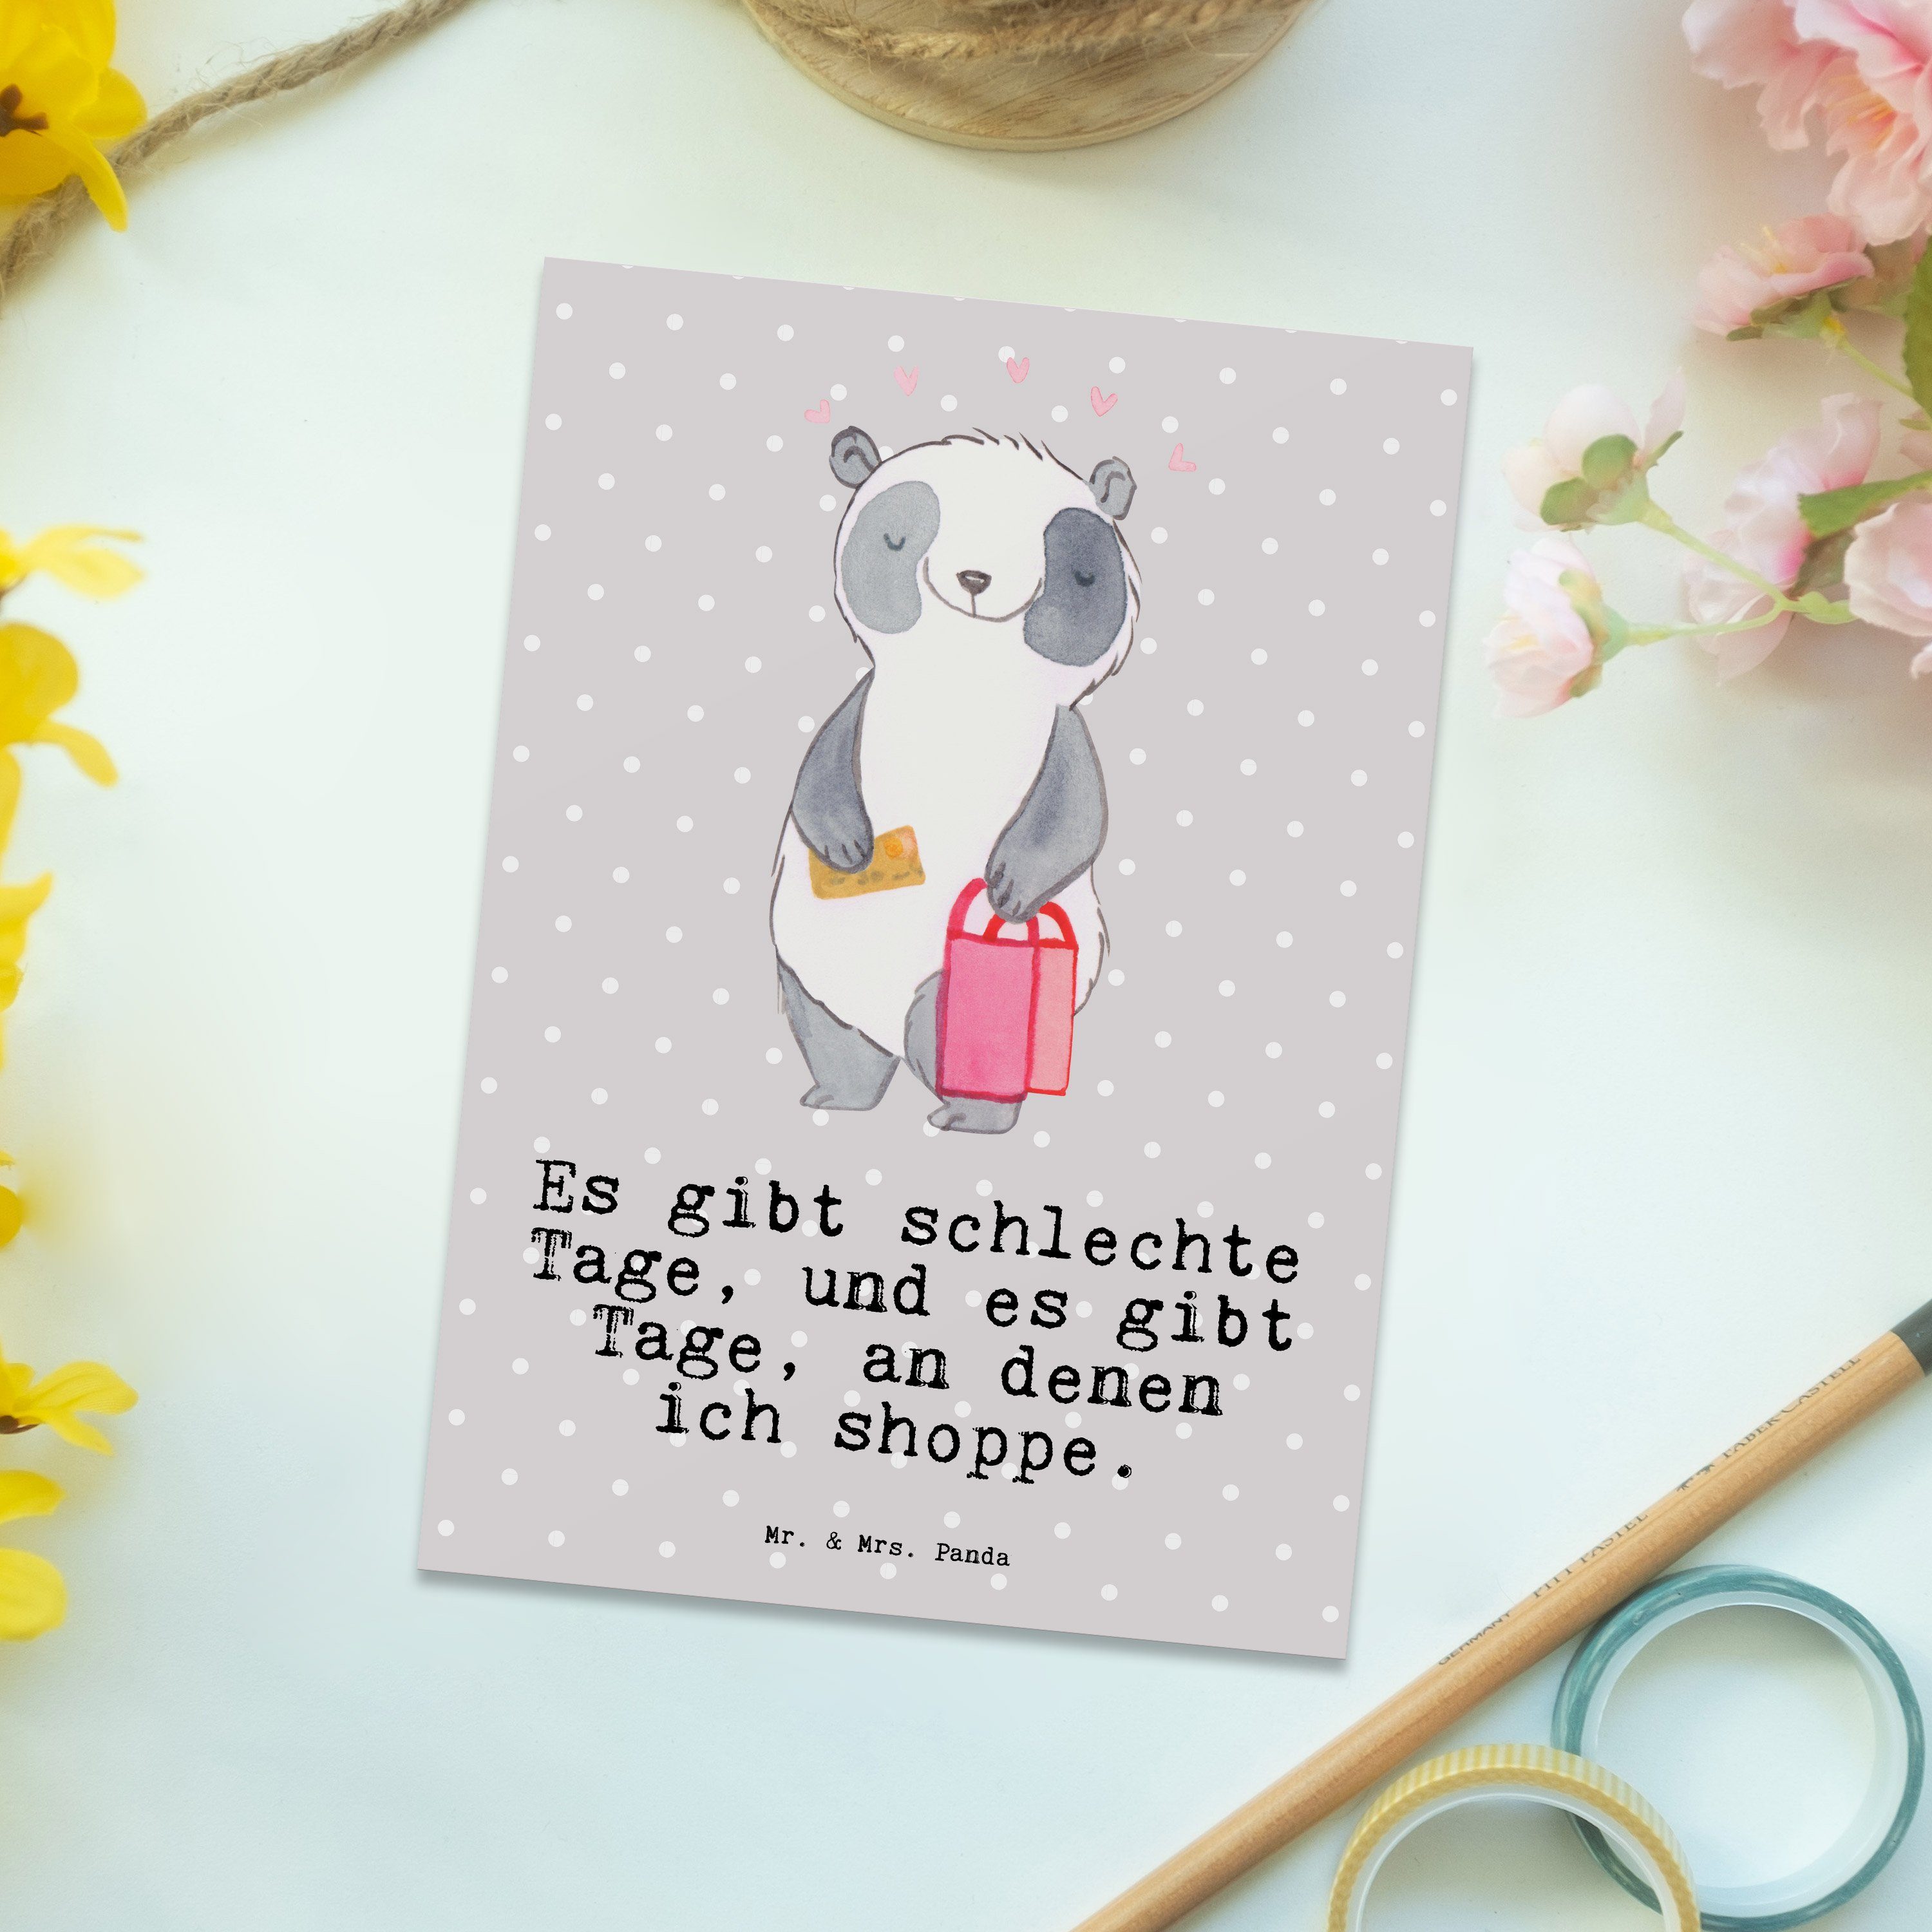 Mr. & Mrs. Panda Postkarte Panda Shopping Tage - Grau Pastell - Geschenk, Auszeichnung, Danke, S